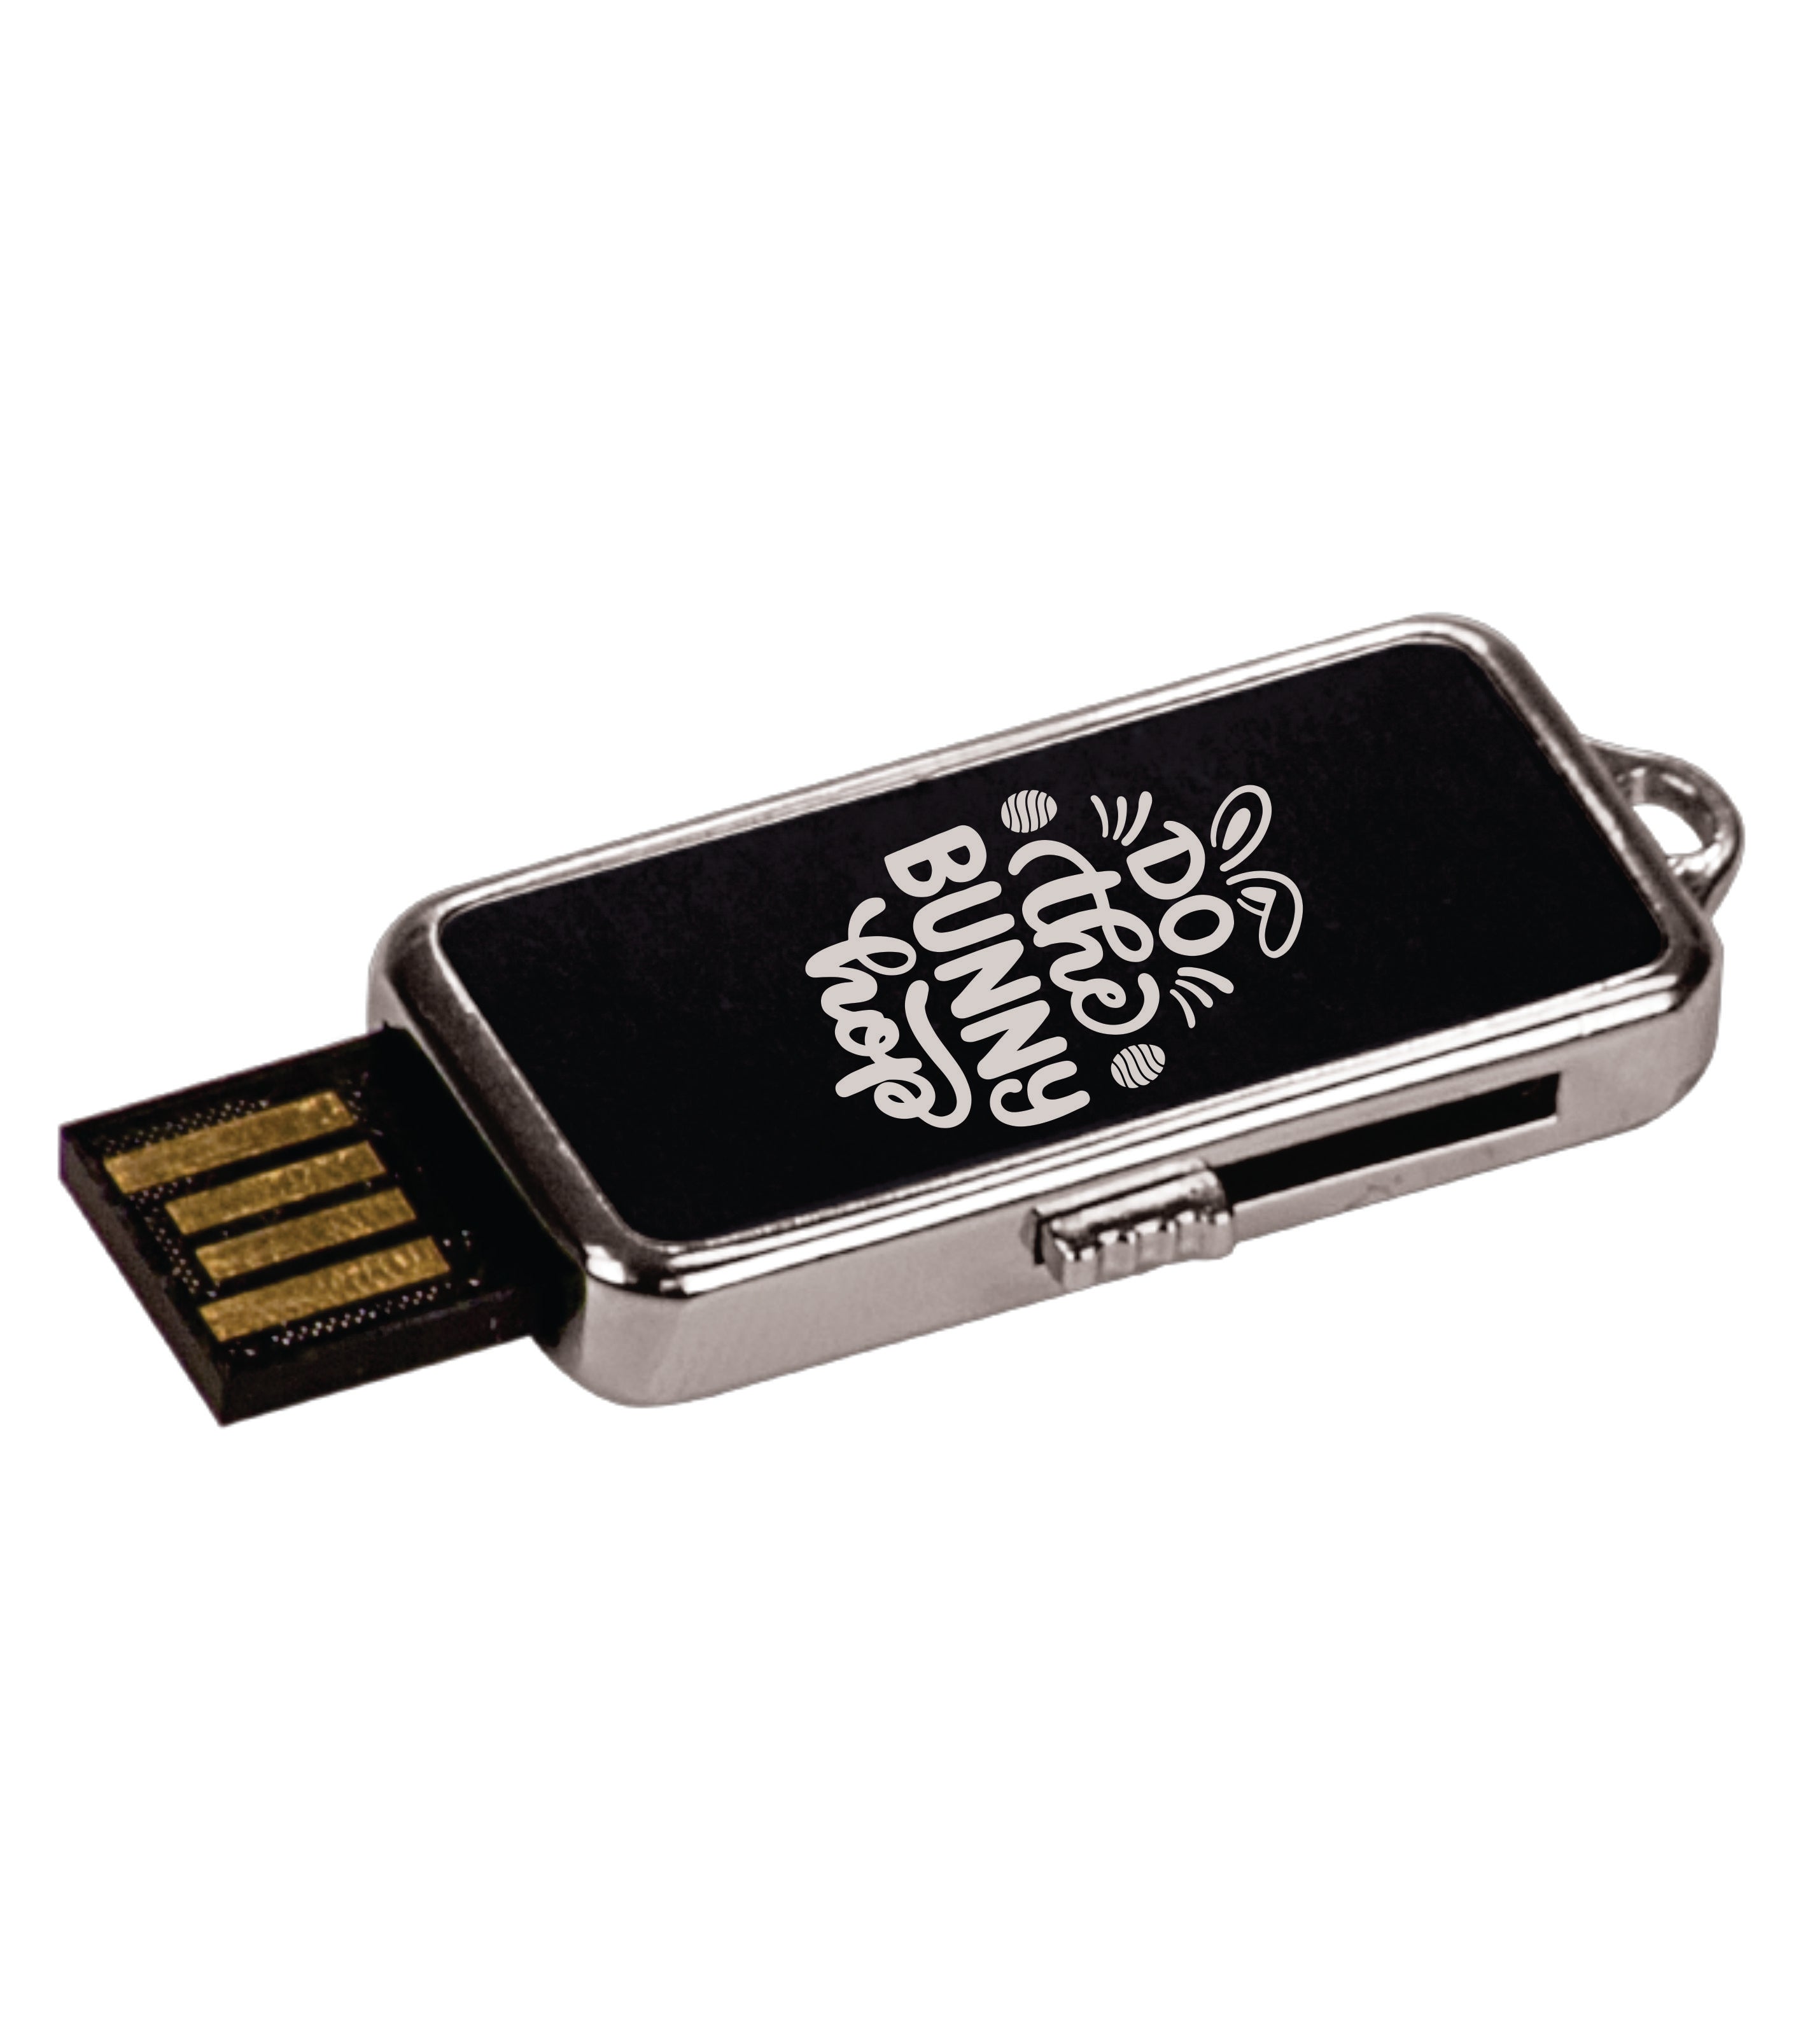 3/4" x 1 1/2" x 1/4" 8GB Black/Silver Metal USB Flash Drive with Keychain